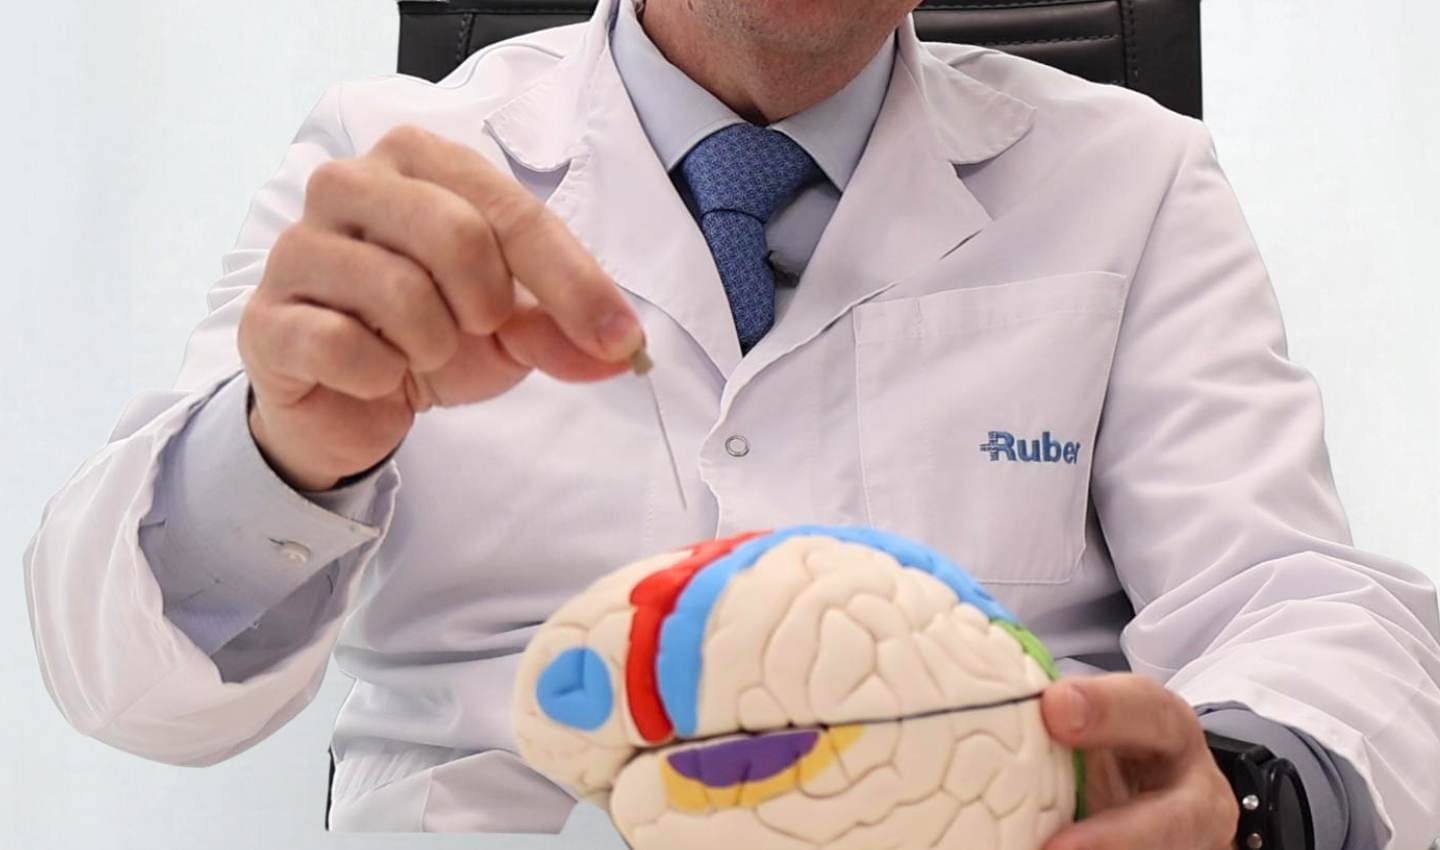 Colocación electrodos cerebrales profundos robotica tratamiento epilepsia refractaria